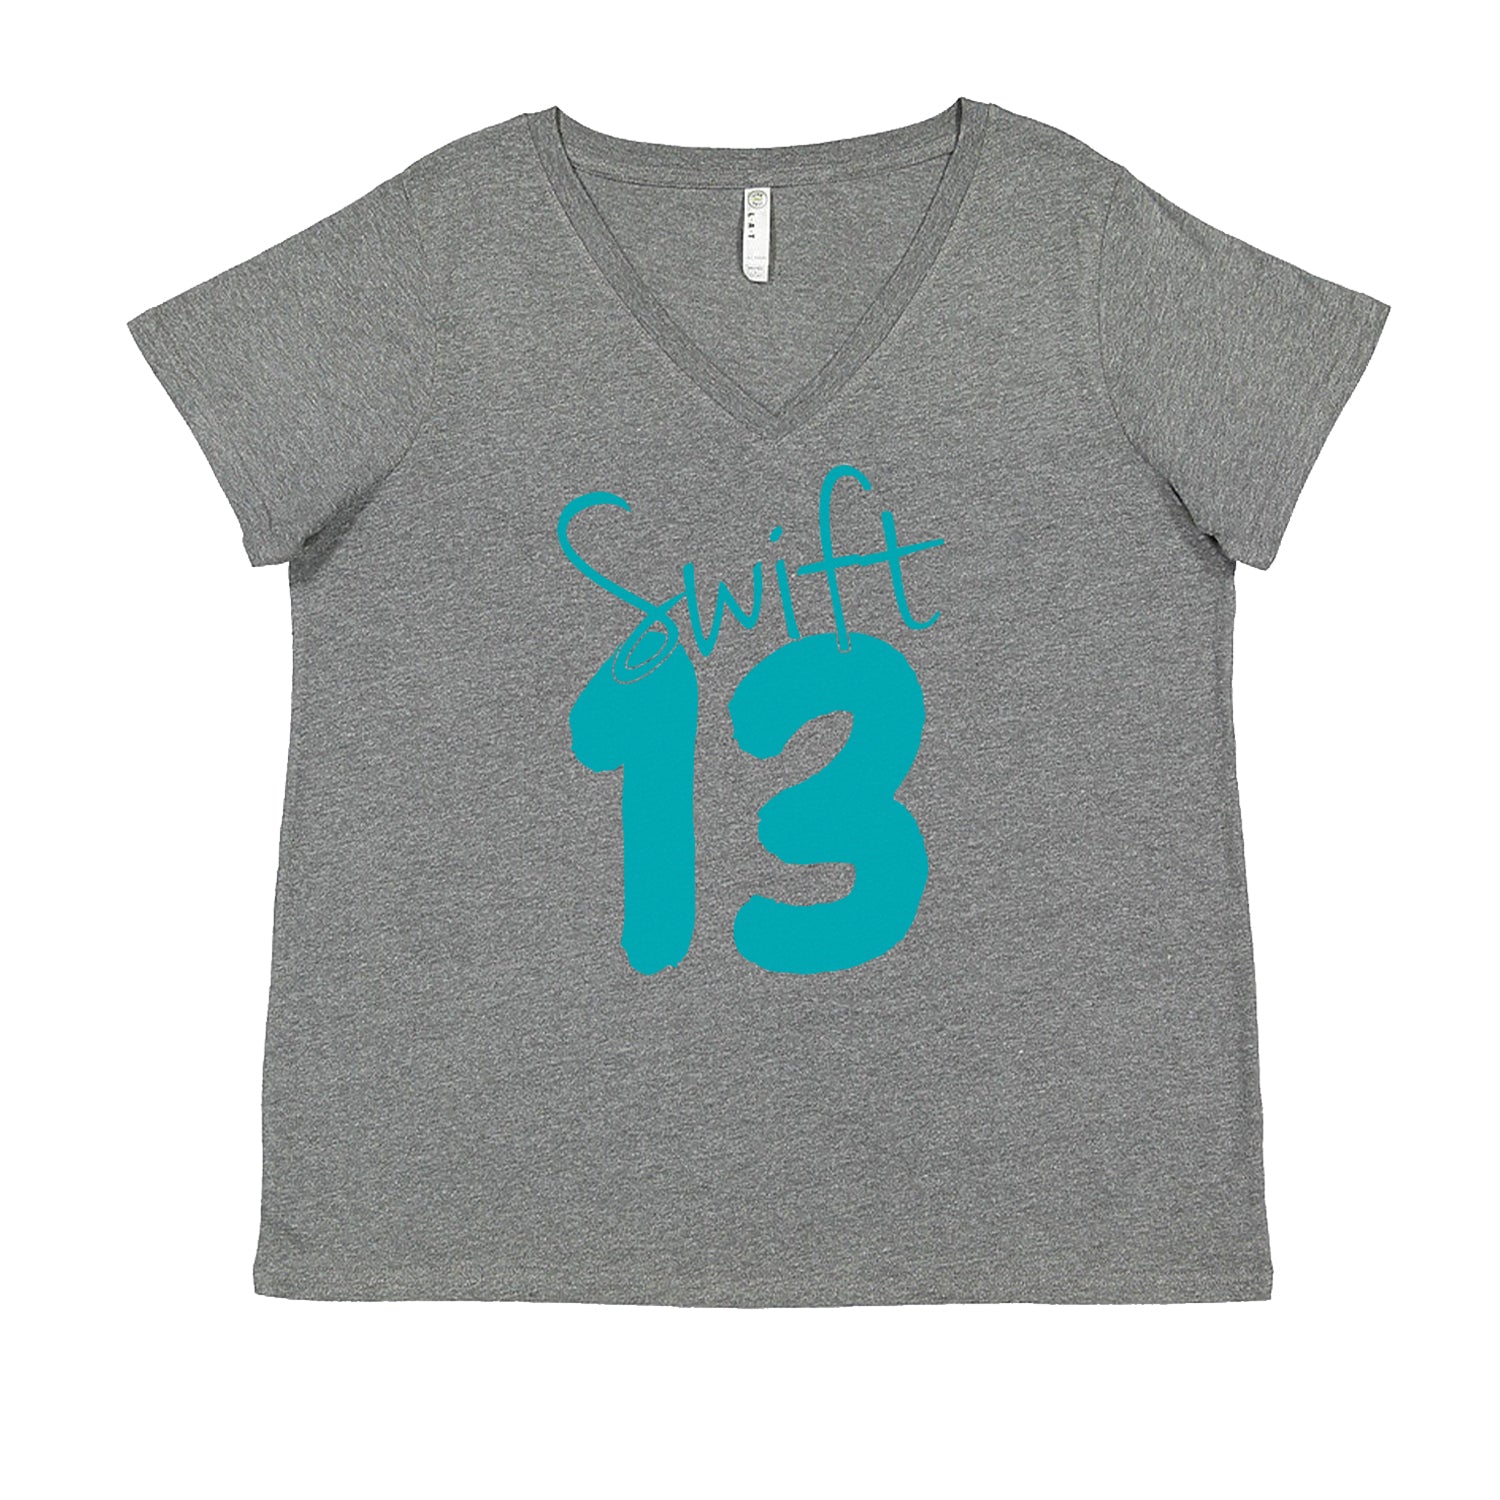 13 Swift 13 Lucky Number Era TTPD Ladies V-Neck T-shirt Heather Grey